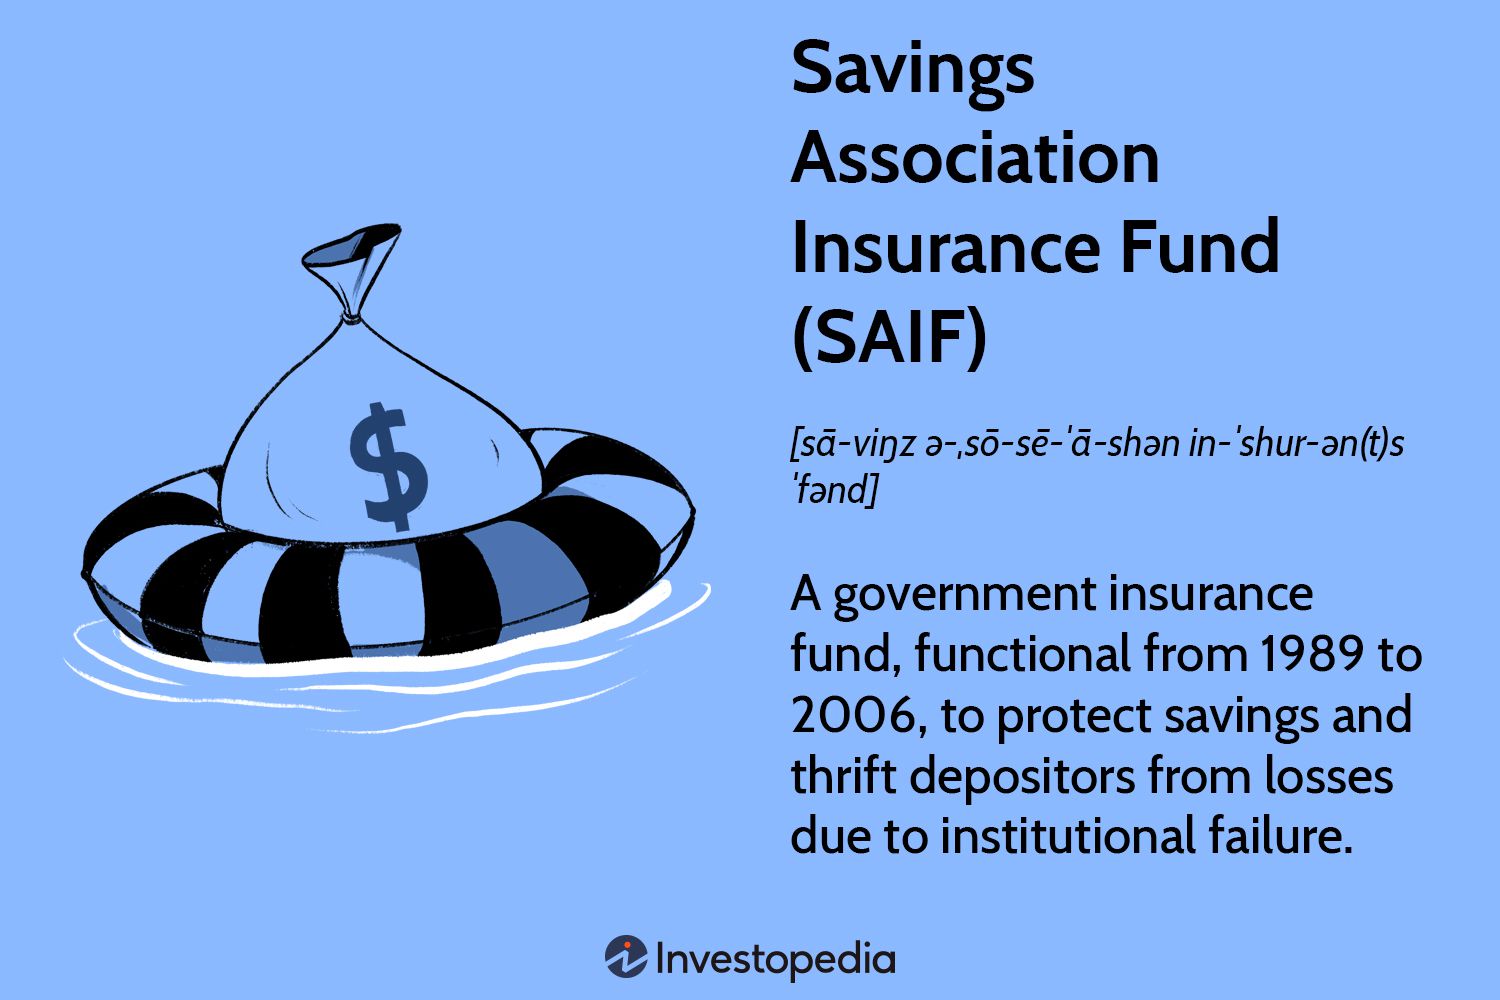 Savings Association Insurance Fund (SAIF)